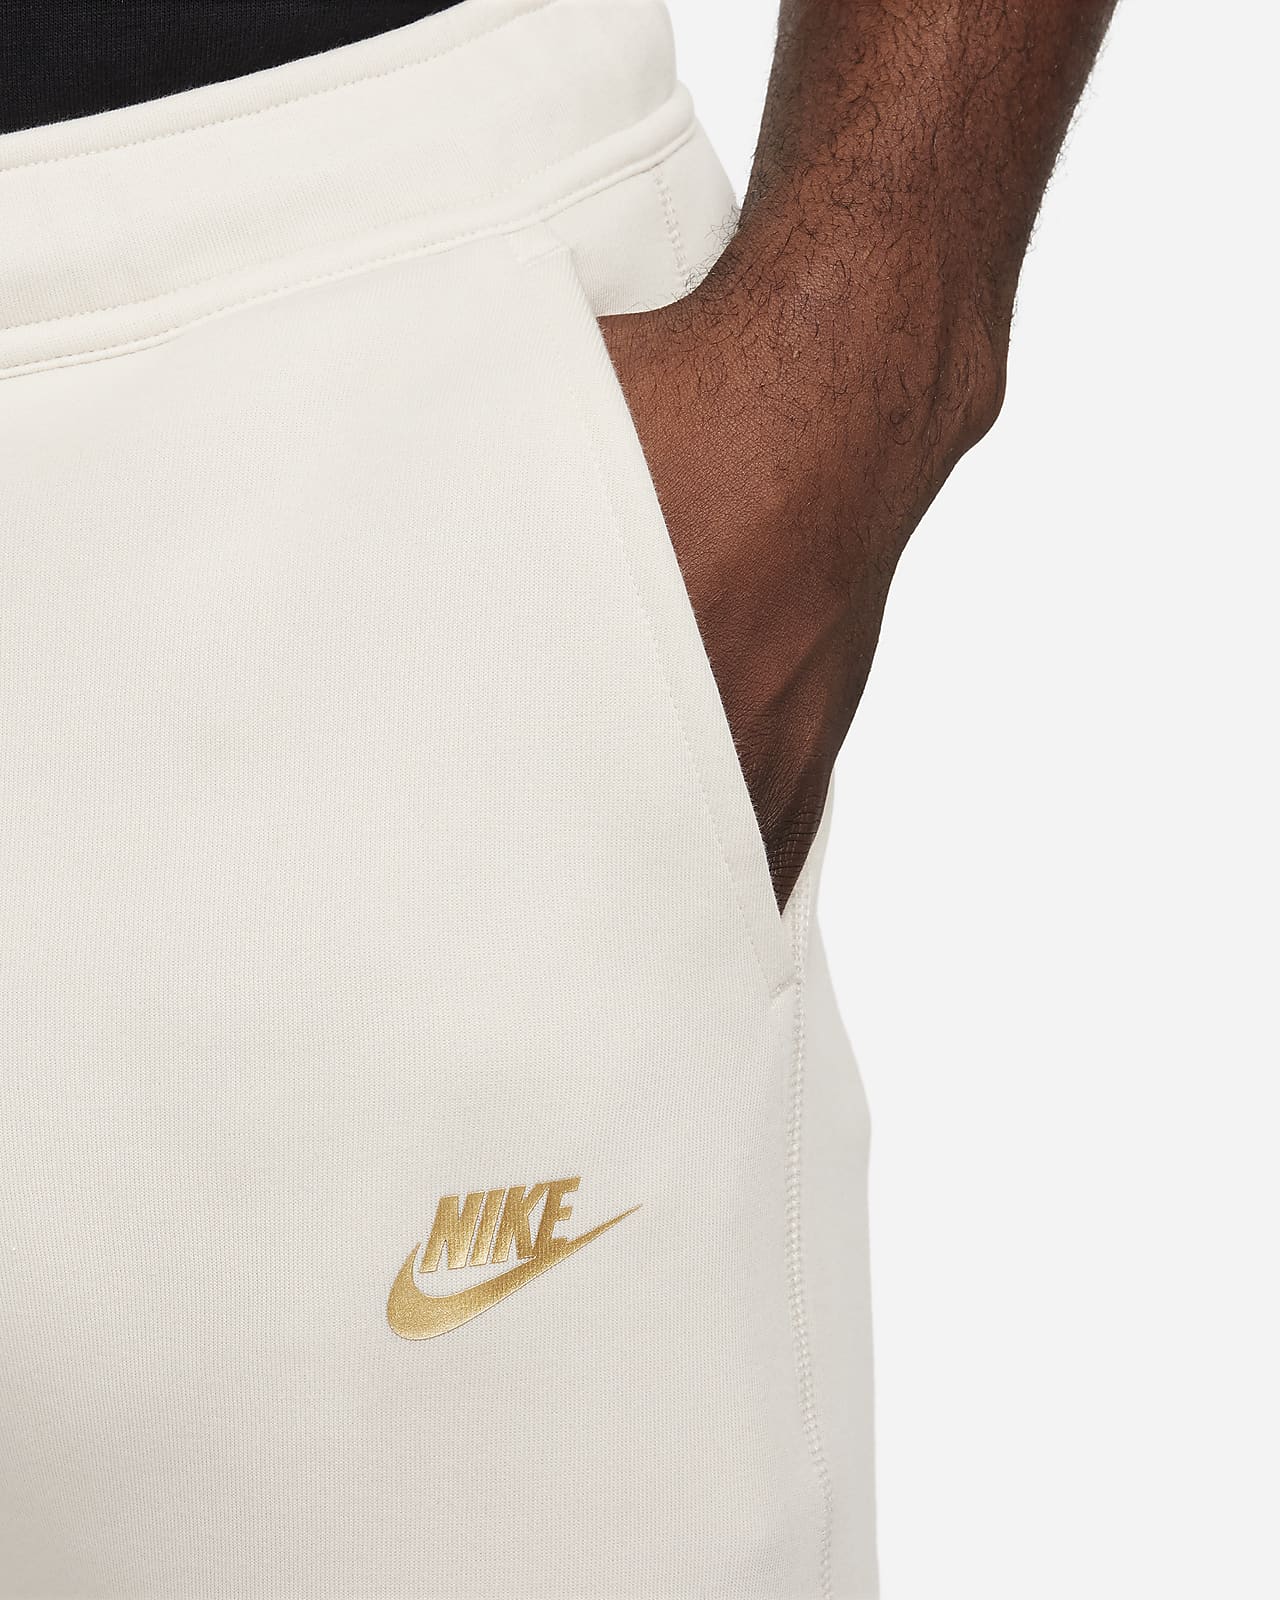 Nike Size S L XL XL-Tall Men's Sportswear Tech Fleece Joggers Pants NEW  COLOR